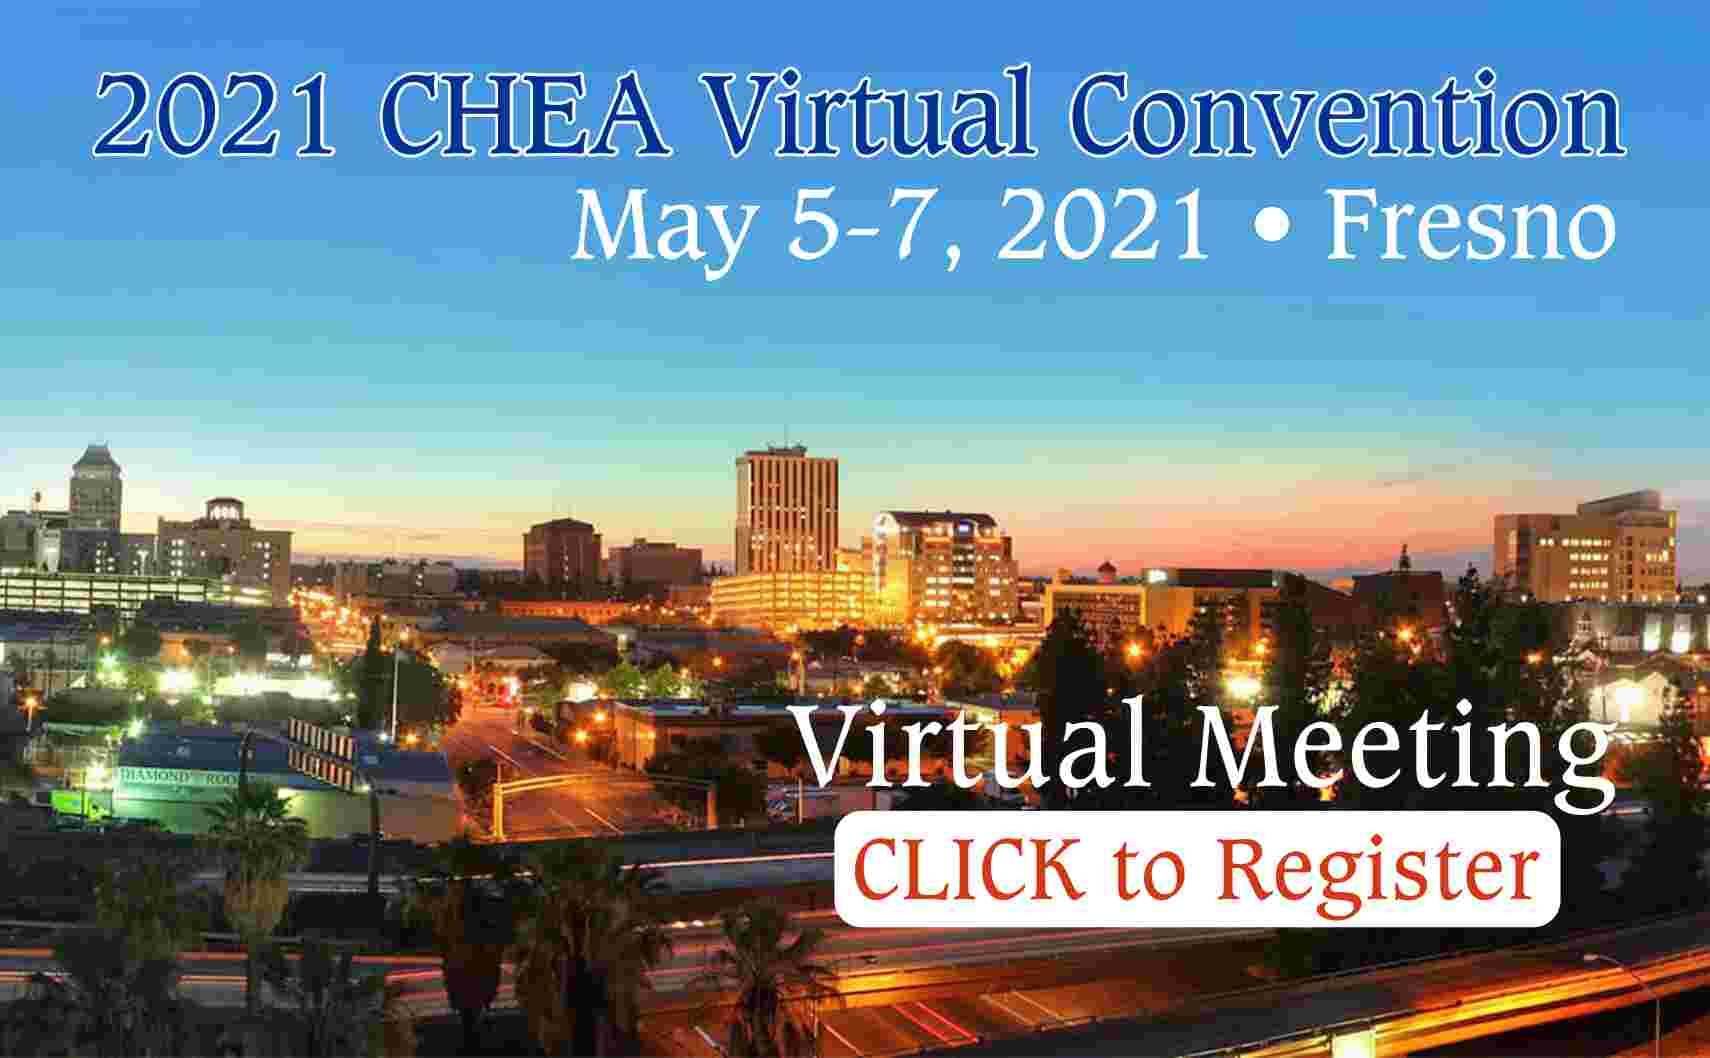 CHEA Convention 2021 CaliforniaHawaii Elks Association